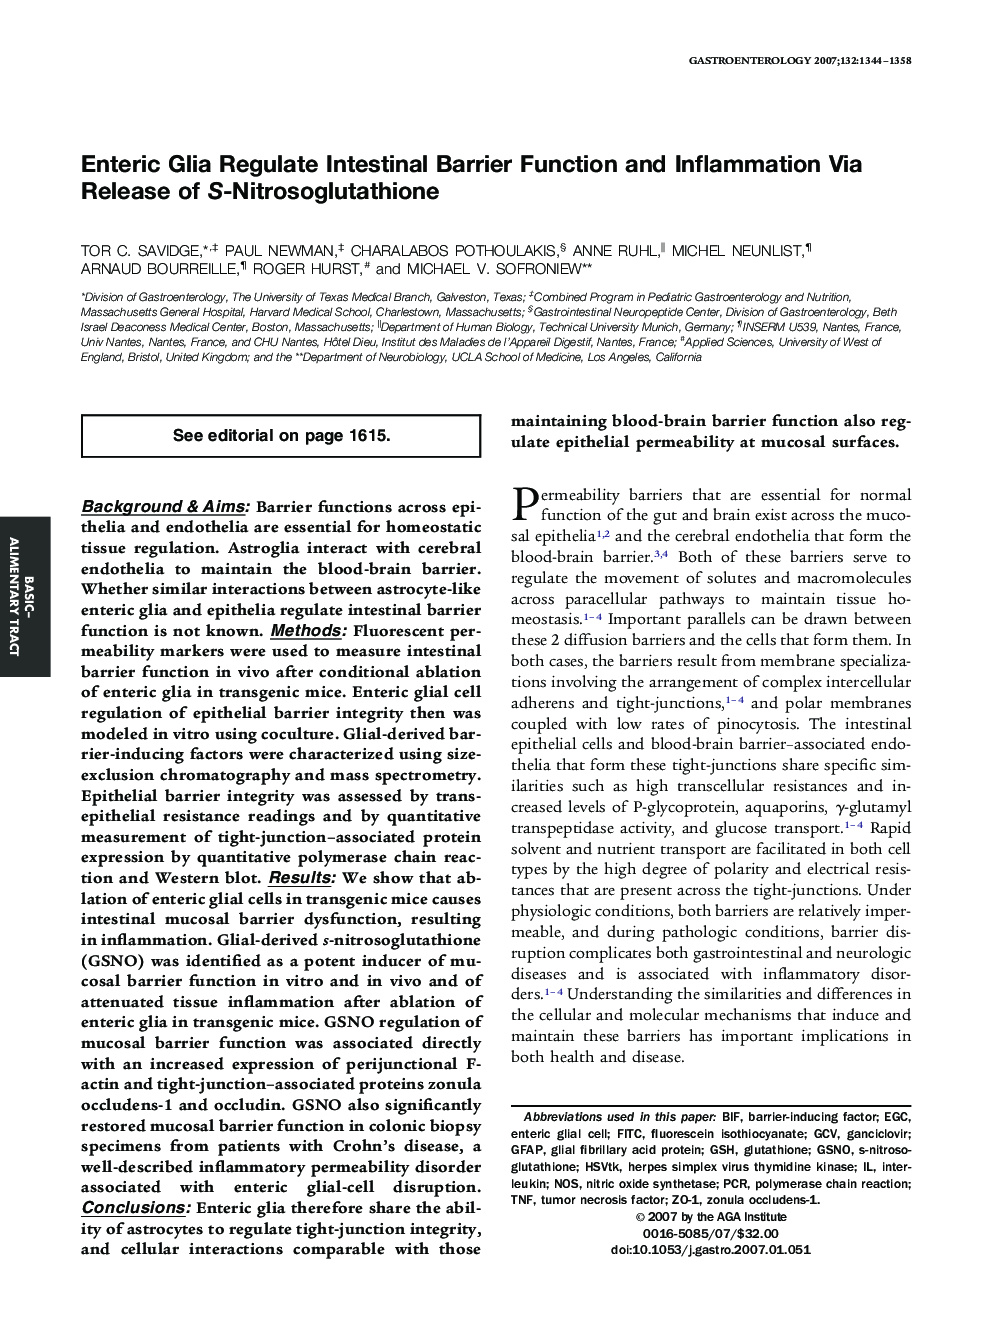 Enteric Glia Regulate Intestinal Barrier Function and Inflammation Via Release of S-Nitrosoglutathione 